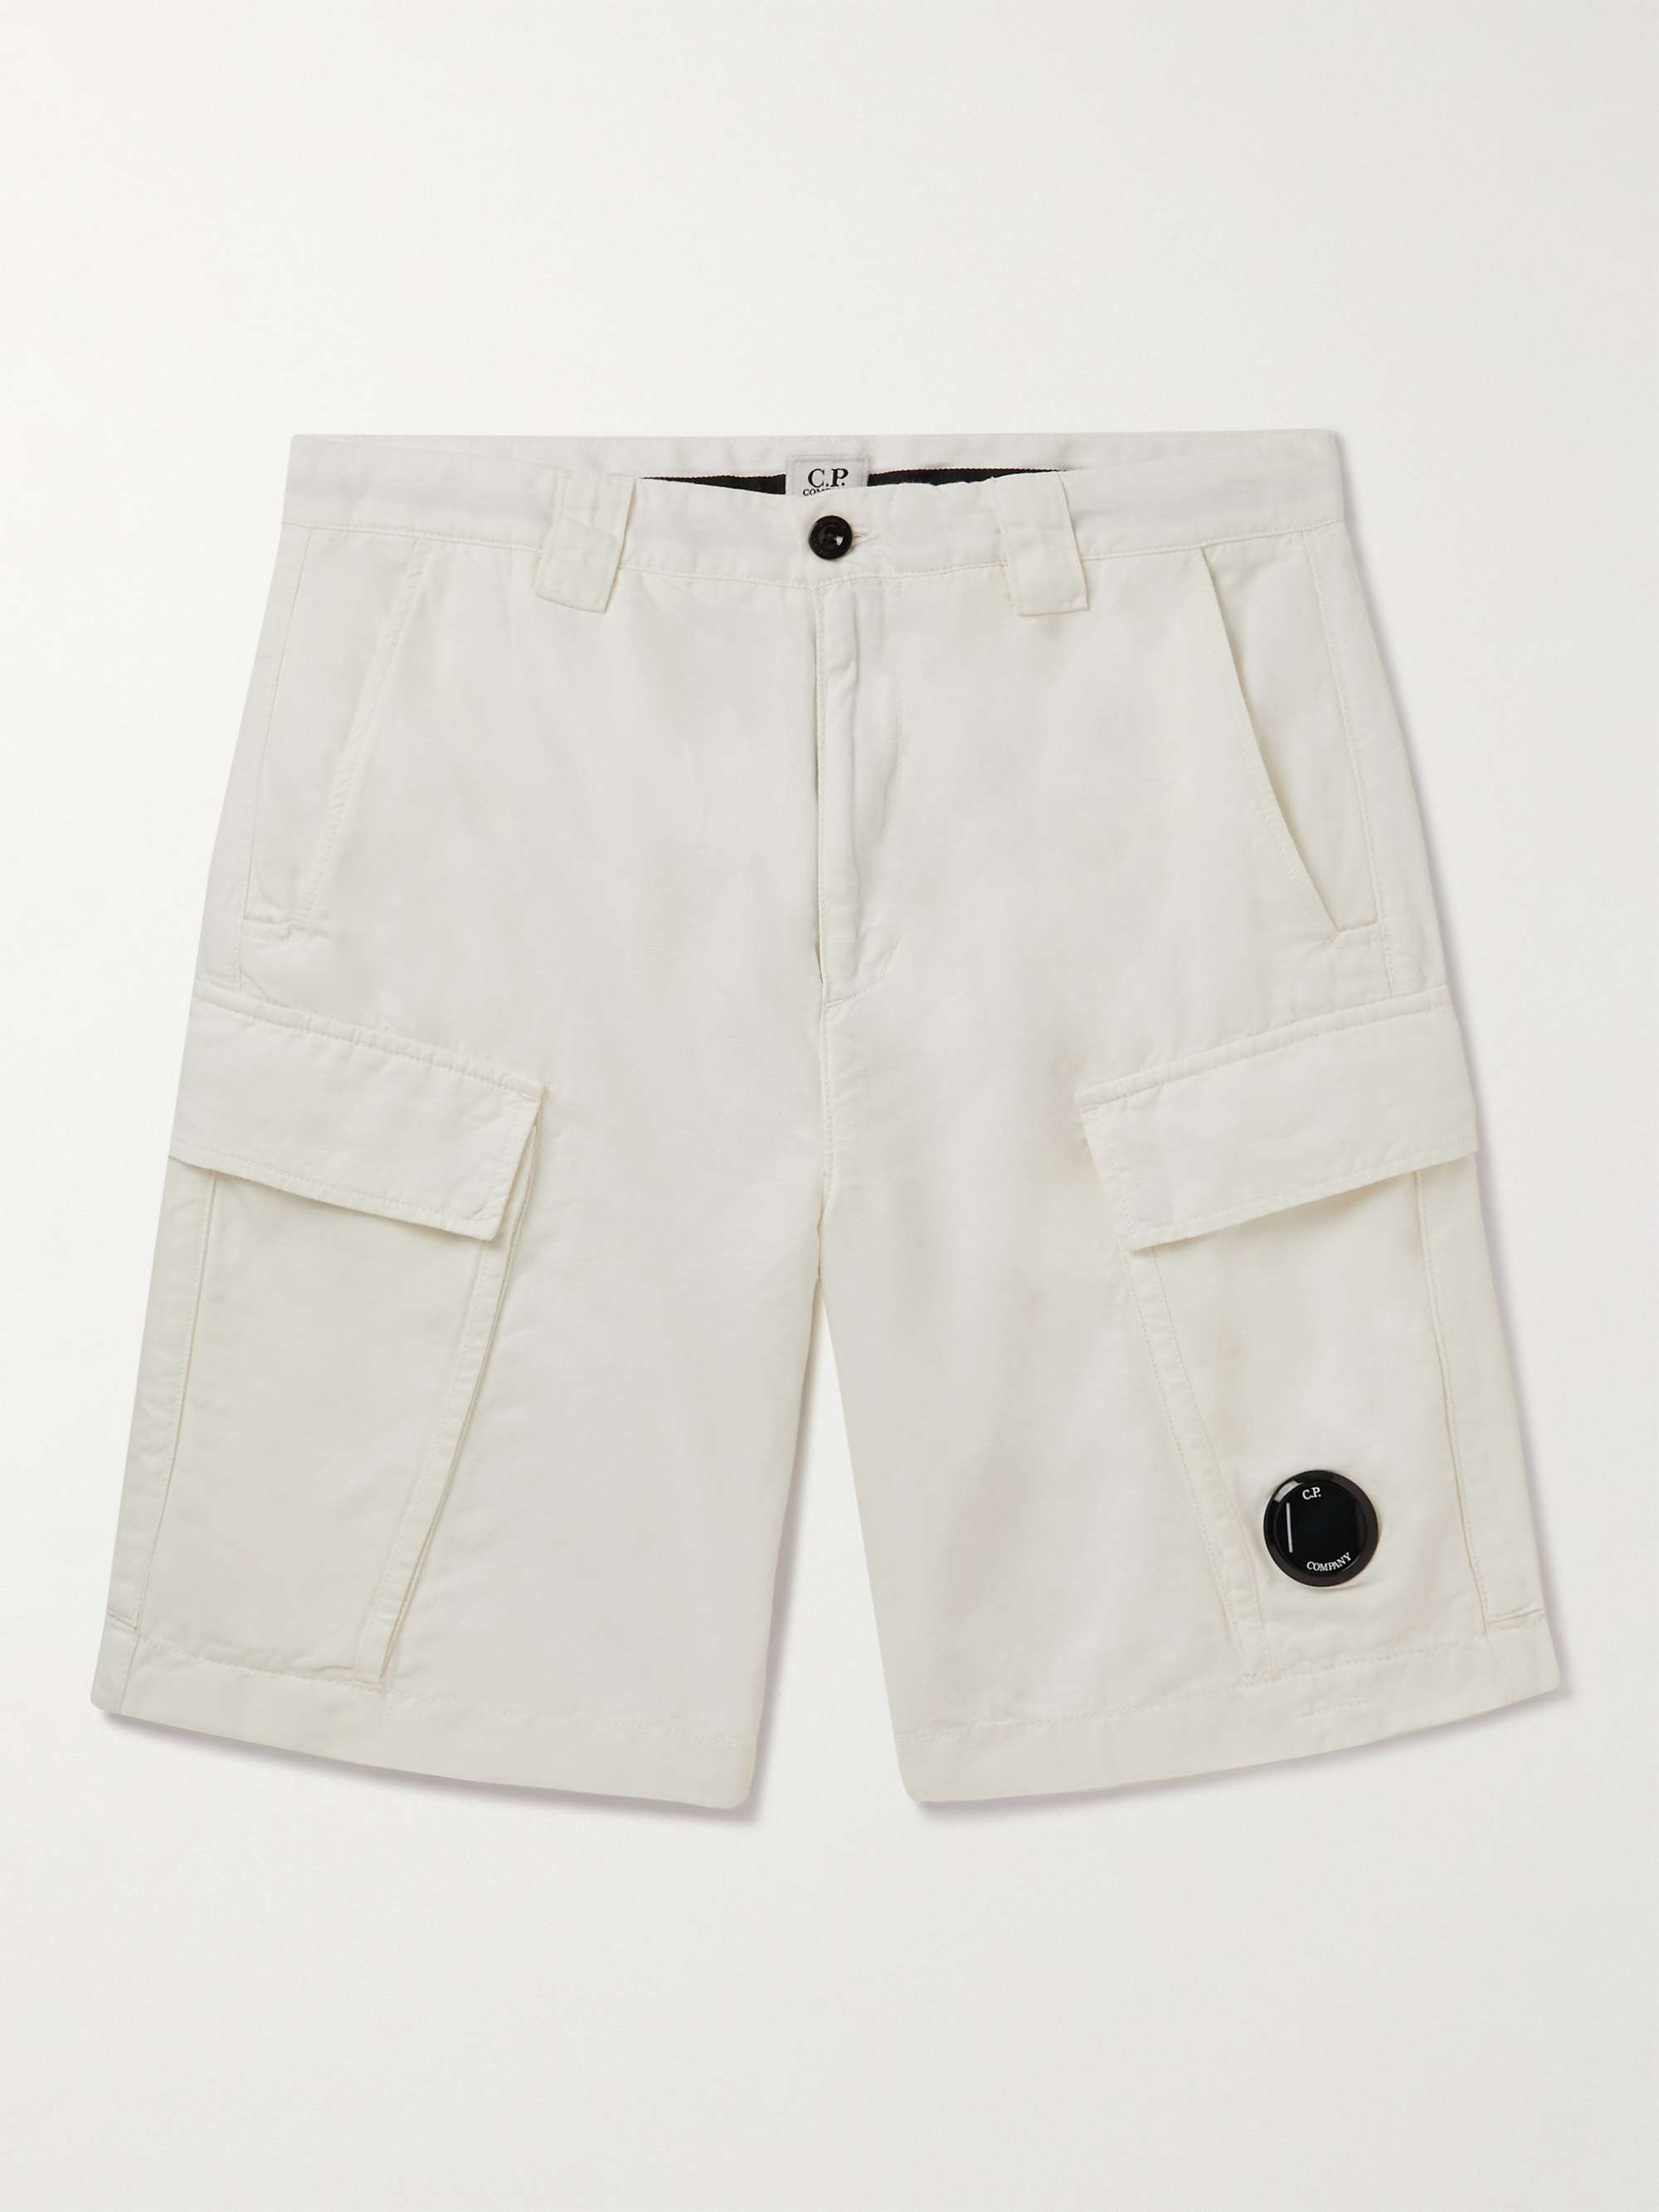 C.P. COMPANY Straight-Leg Cotton and Linen-Blend Cargo Shorts | MR PORTER